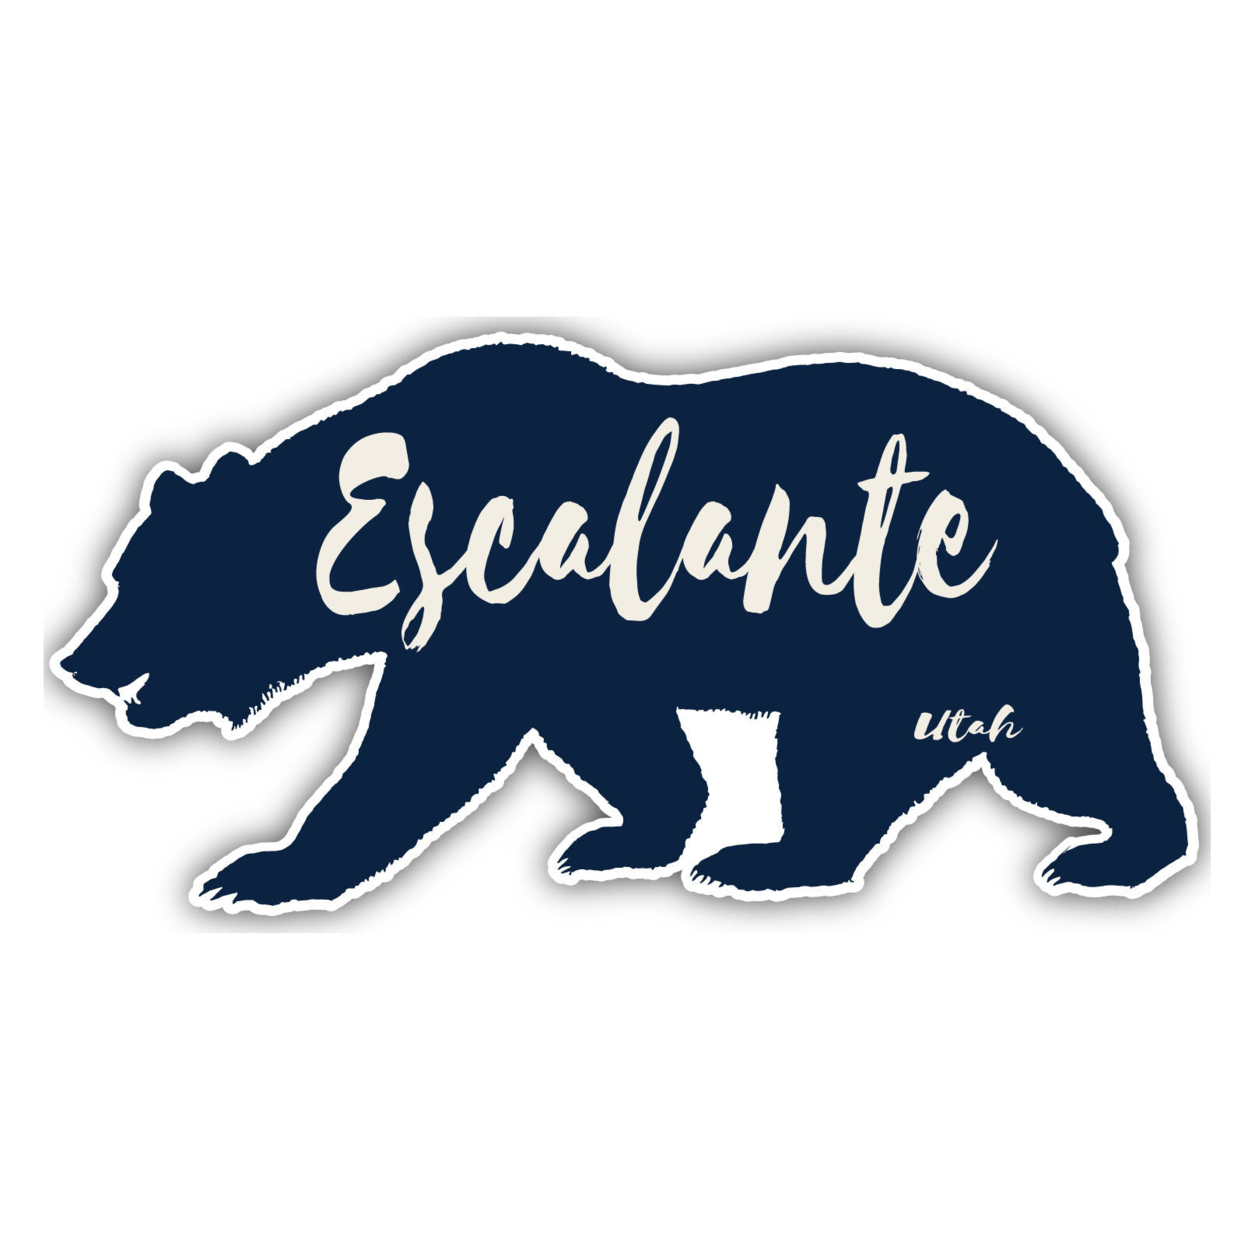 Escalante Utah Souvenir Decorative Stickers (Choose Theme And Size) - Single Unit, 8-Inch, Bear